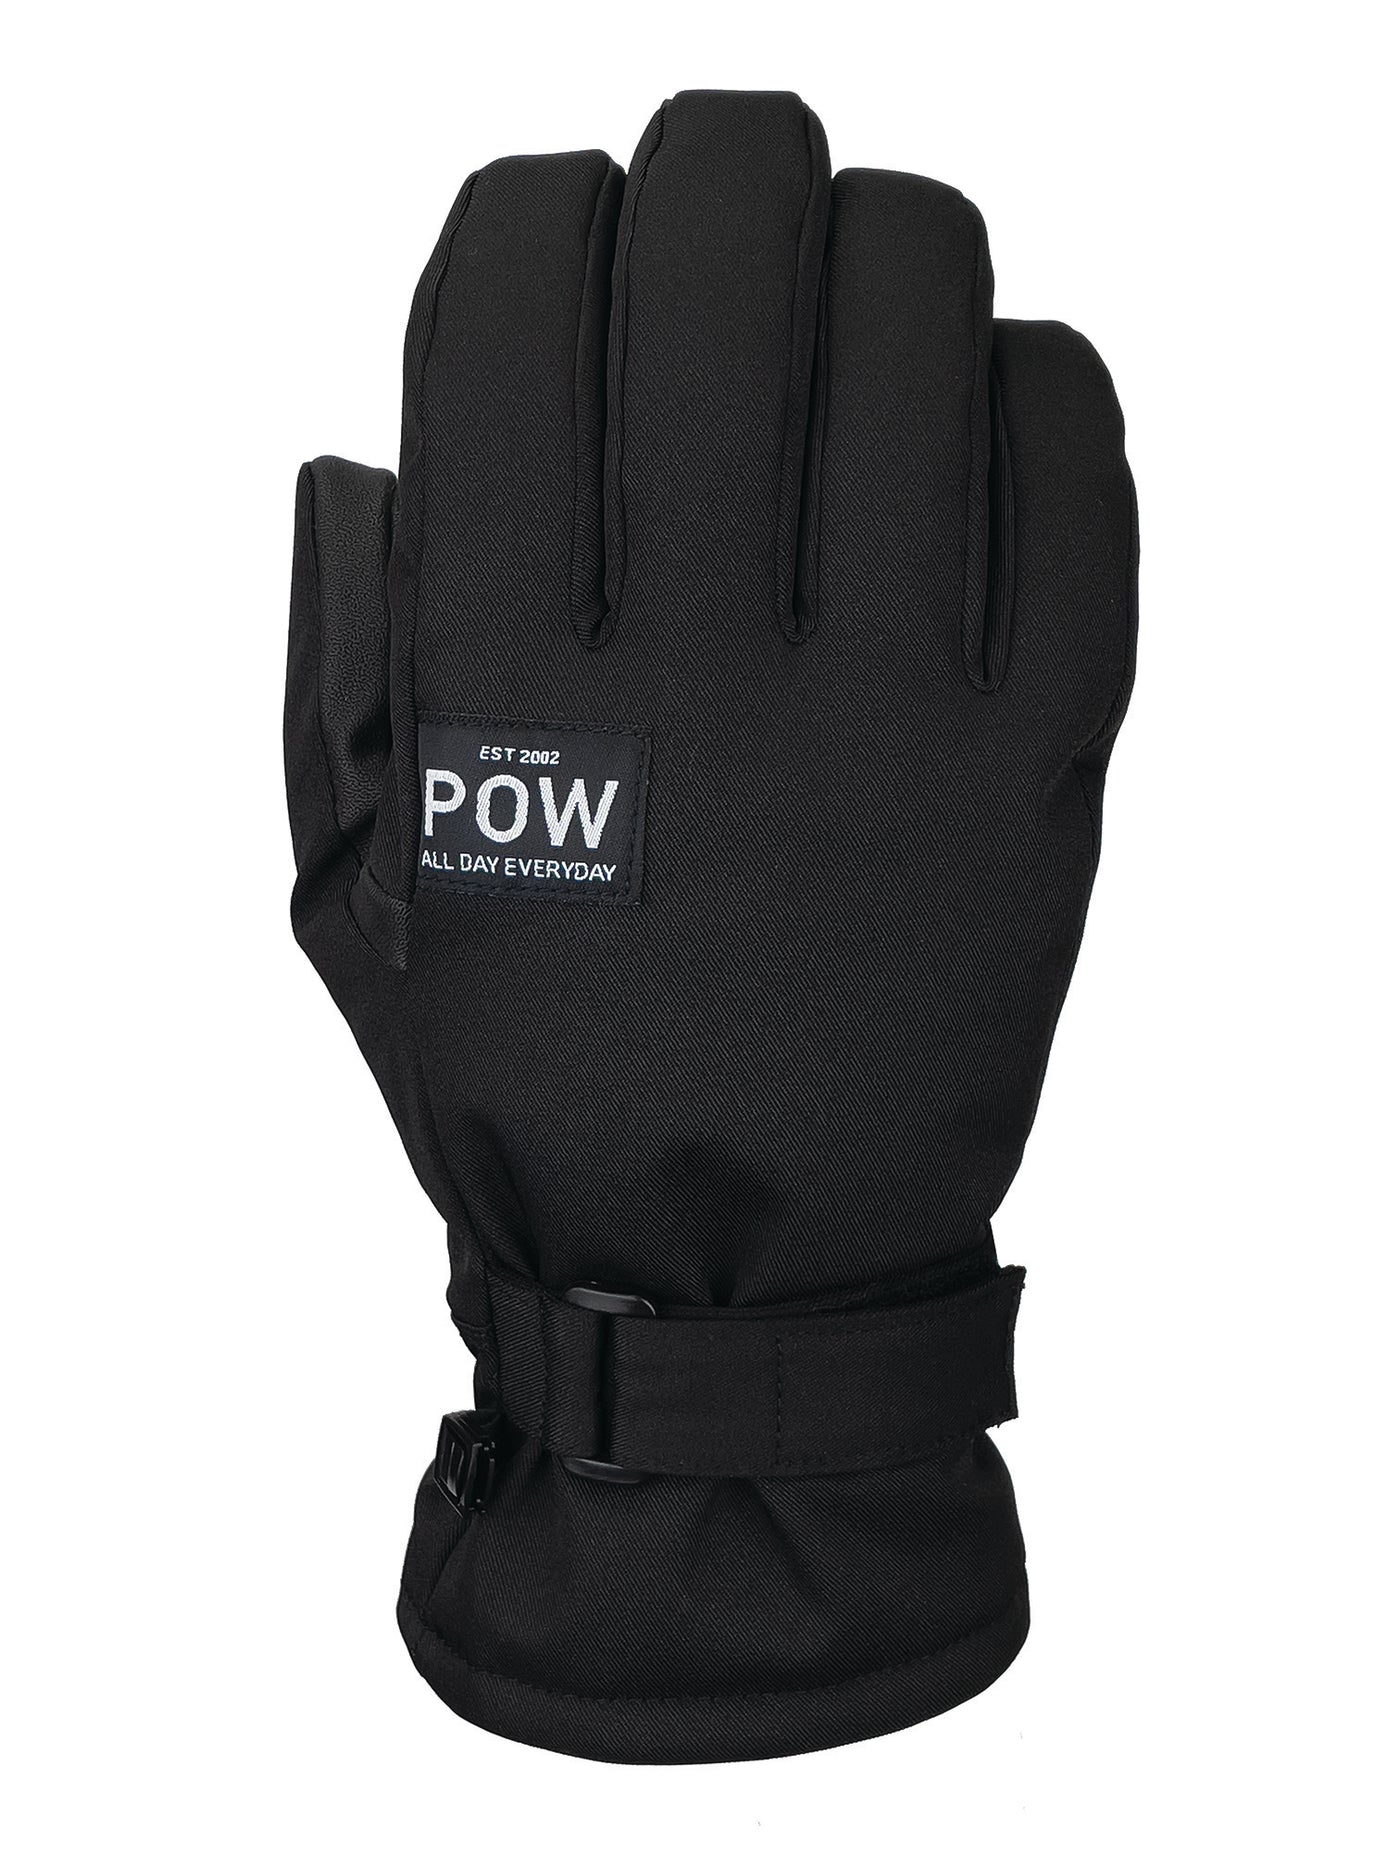 POW XG MID Glove - Black